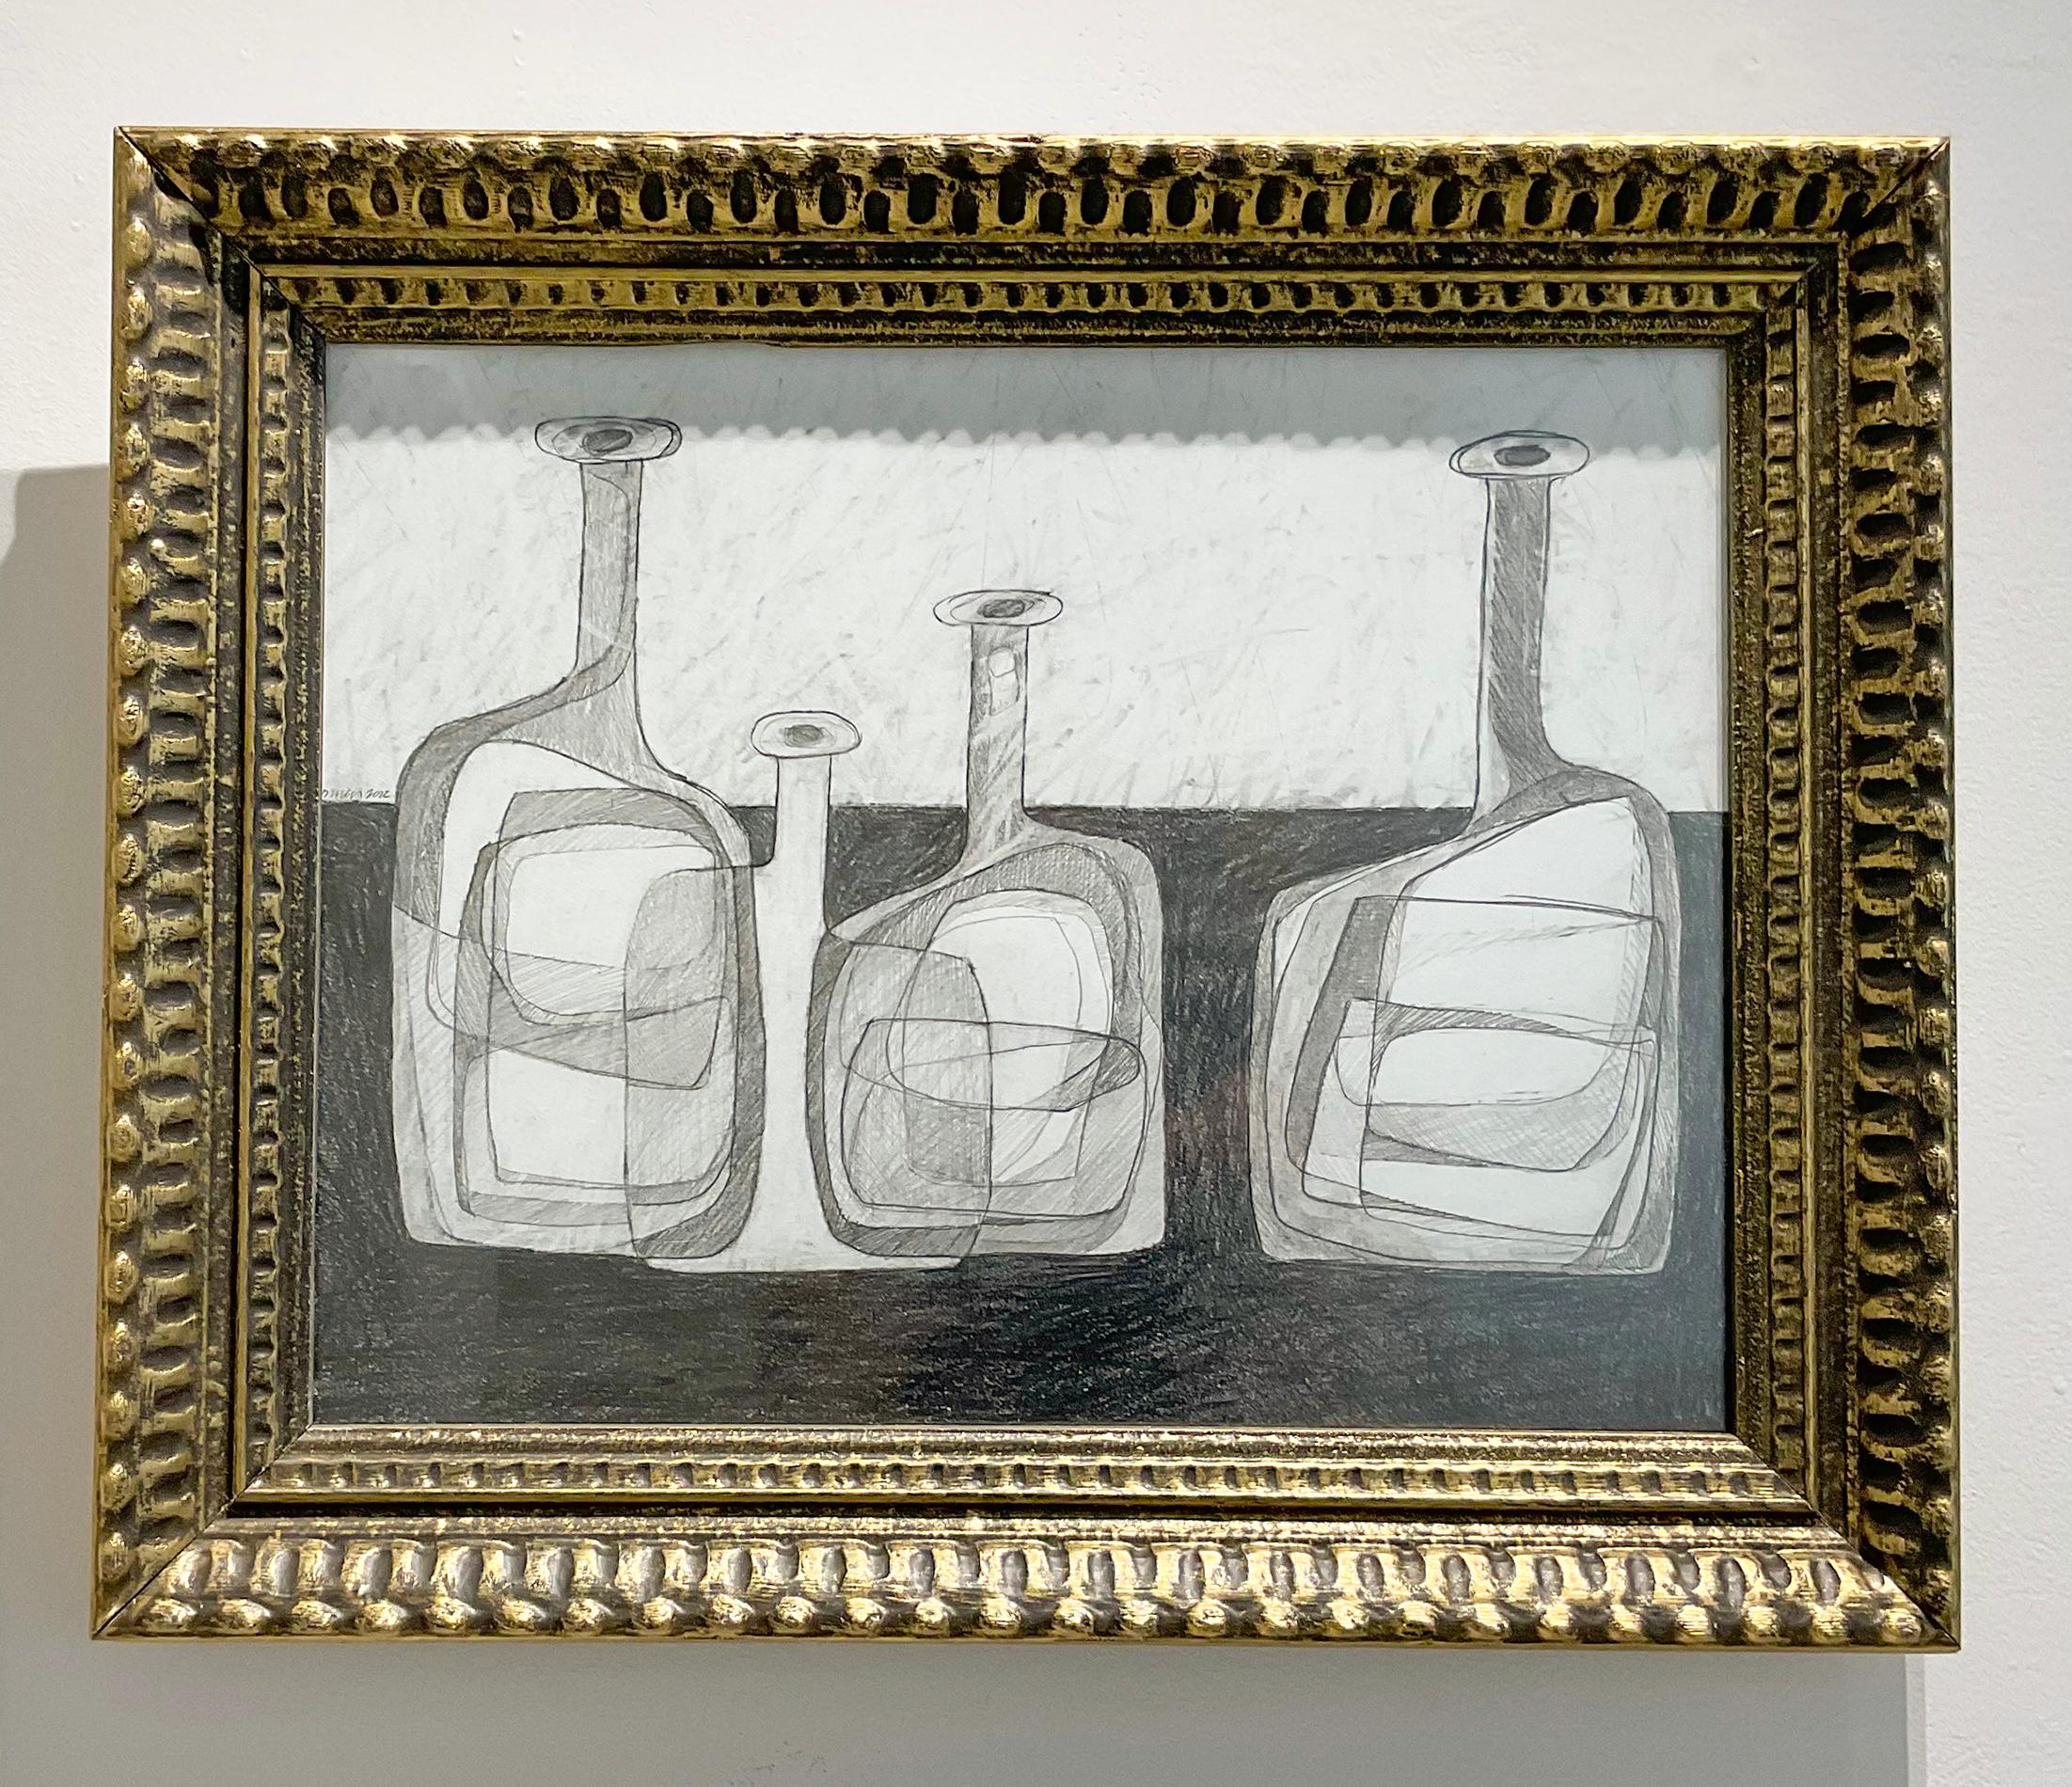 Morandi Bottles: Abstract Cubist Style - Drawing Morandi Bottle - Nature morte au crayon - Art de David Dew Bruner